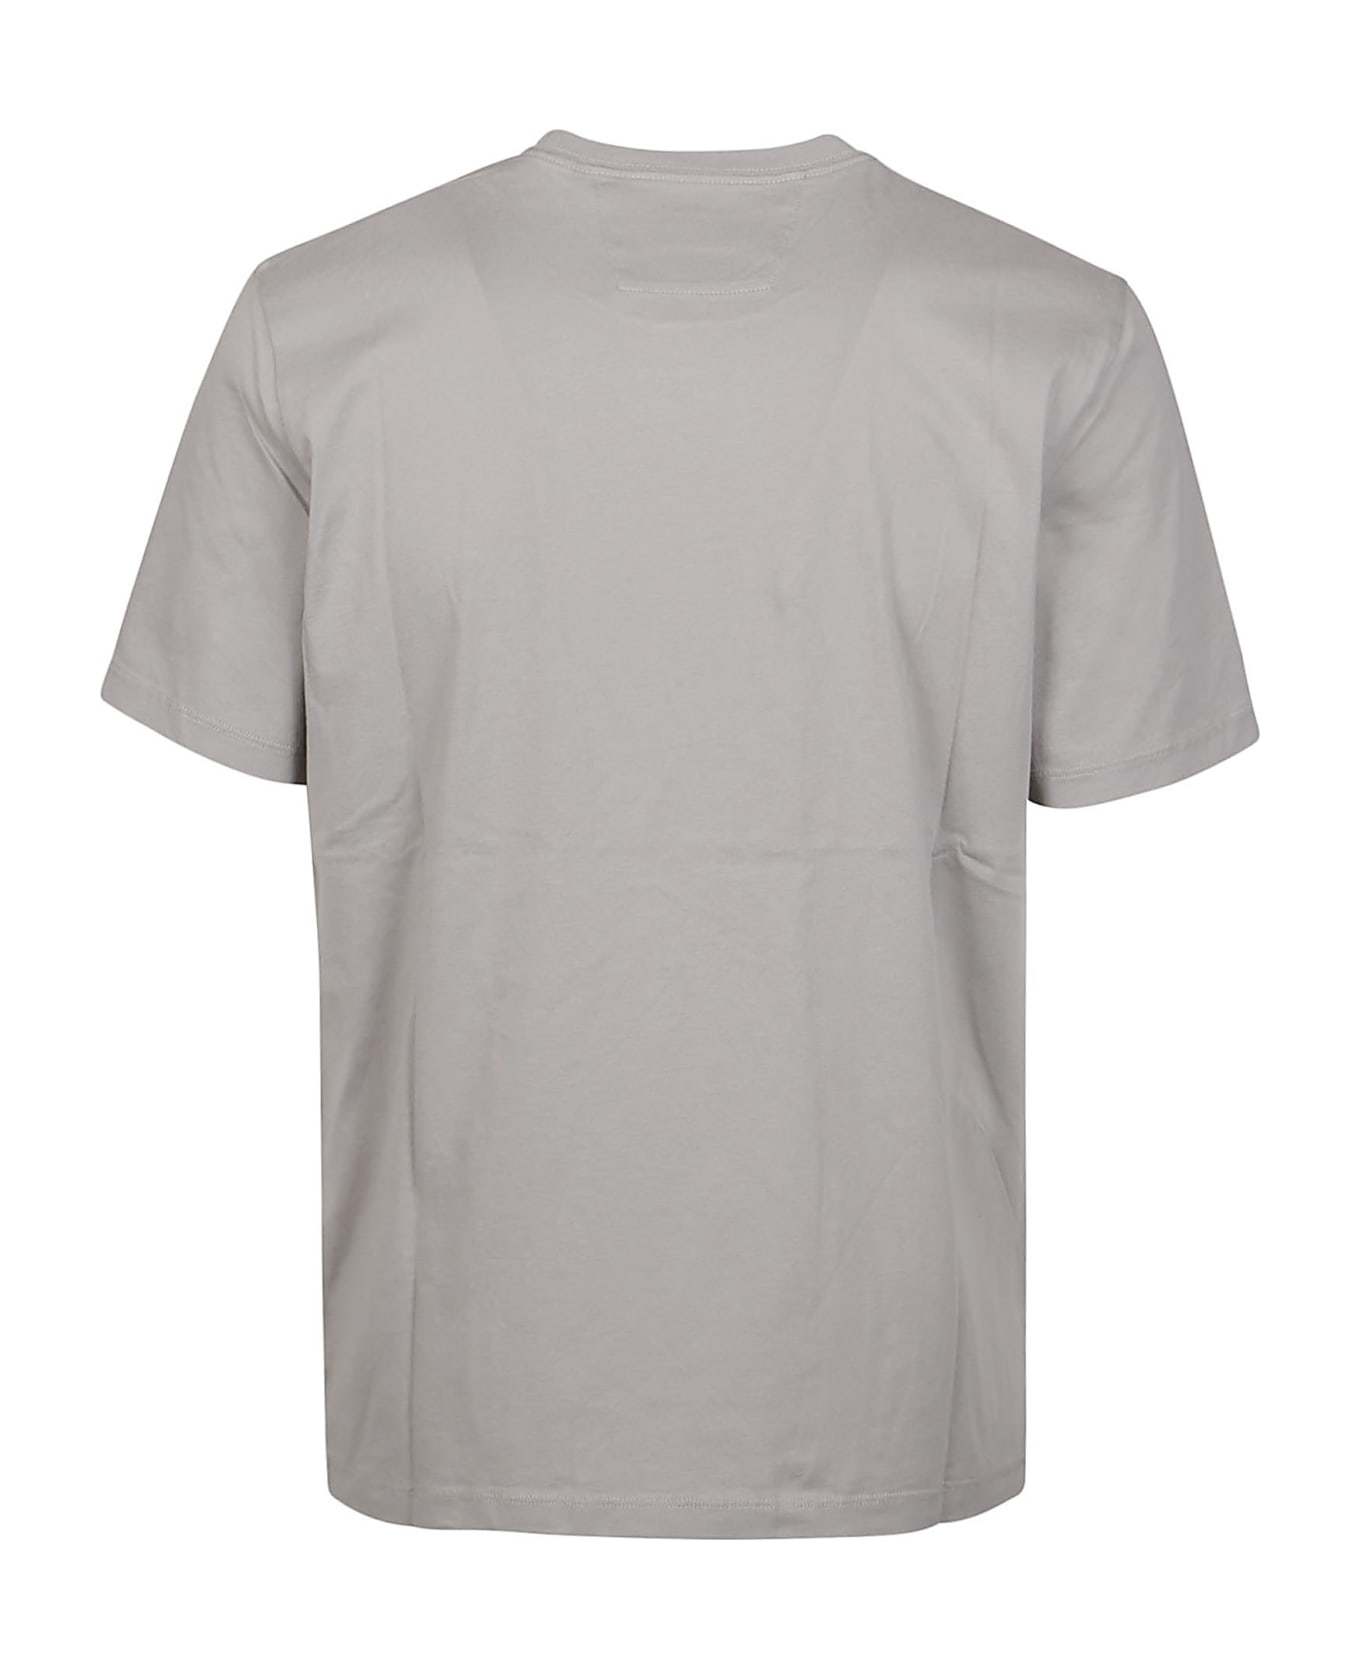 C.P. Company 30/1 Jersey Logo T-shirt - Drizzle Grey シャツ